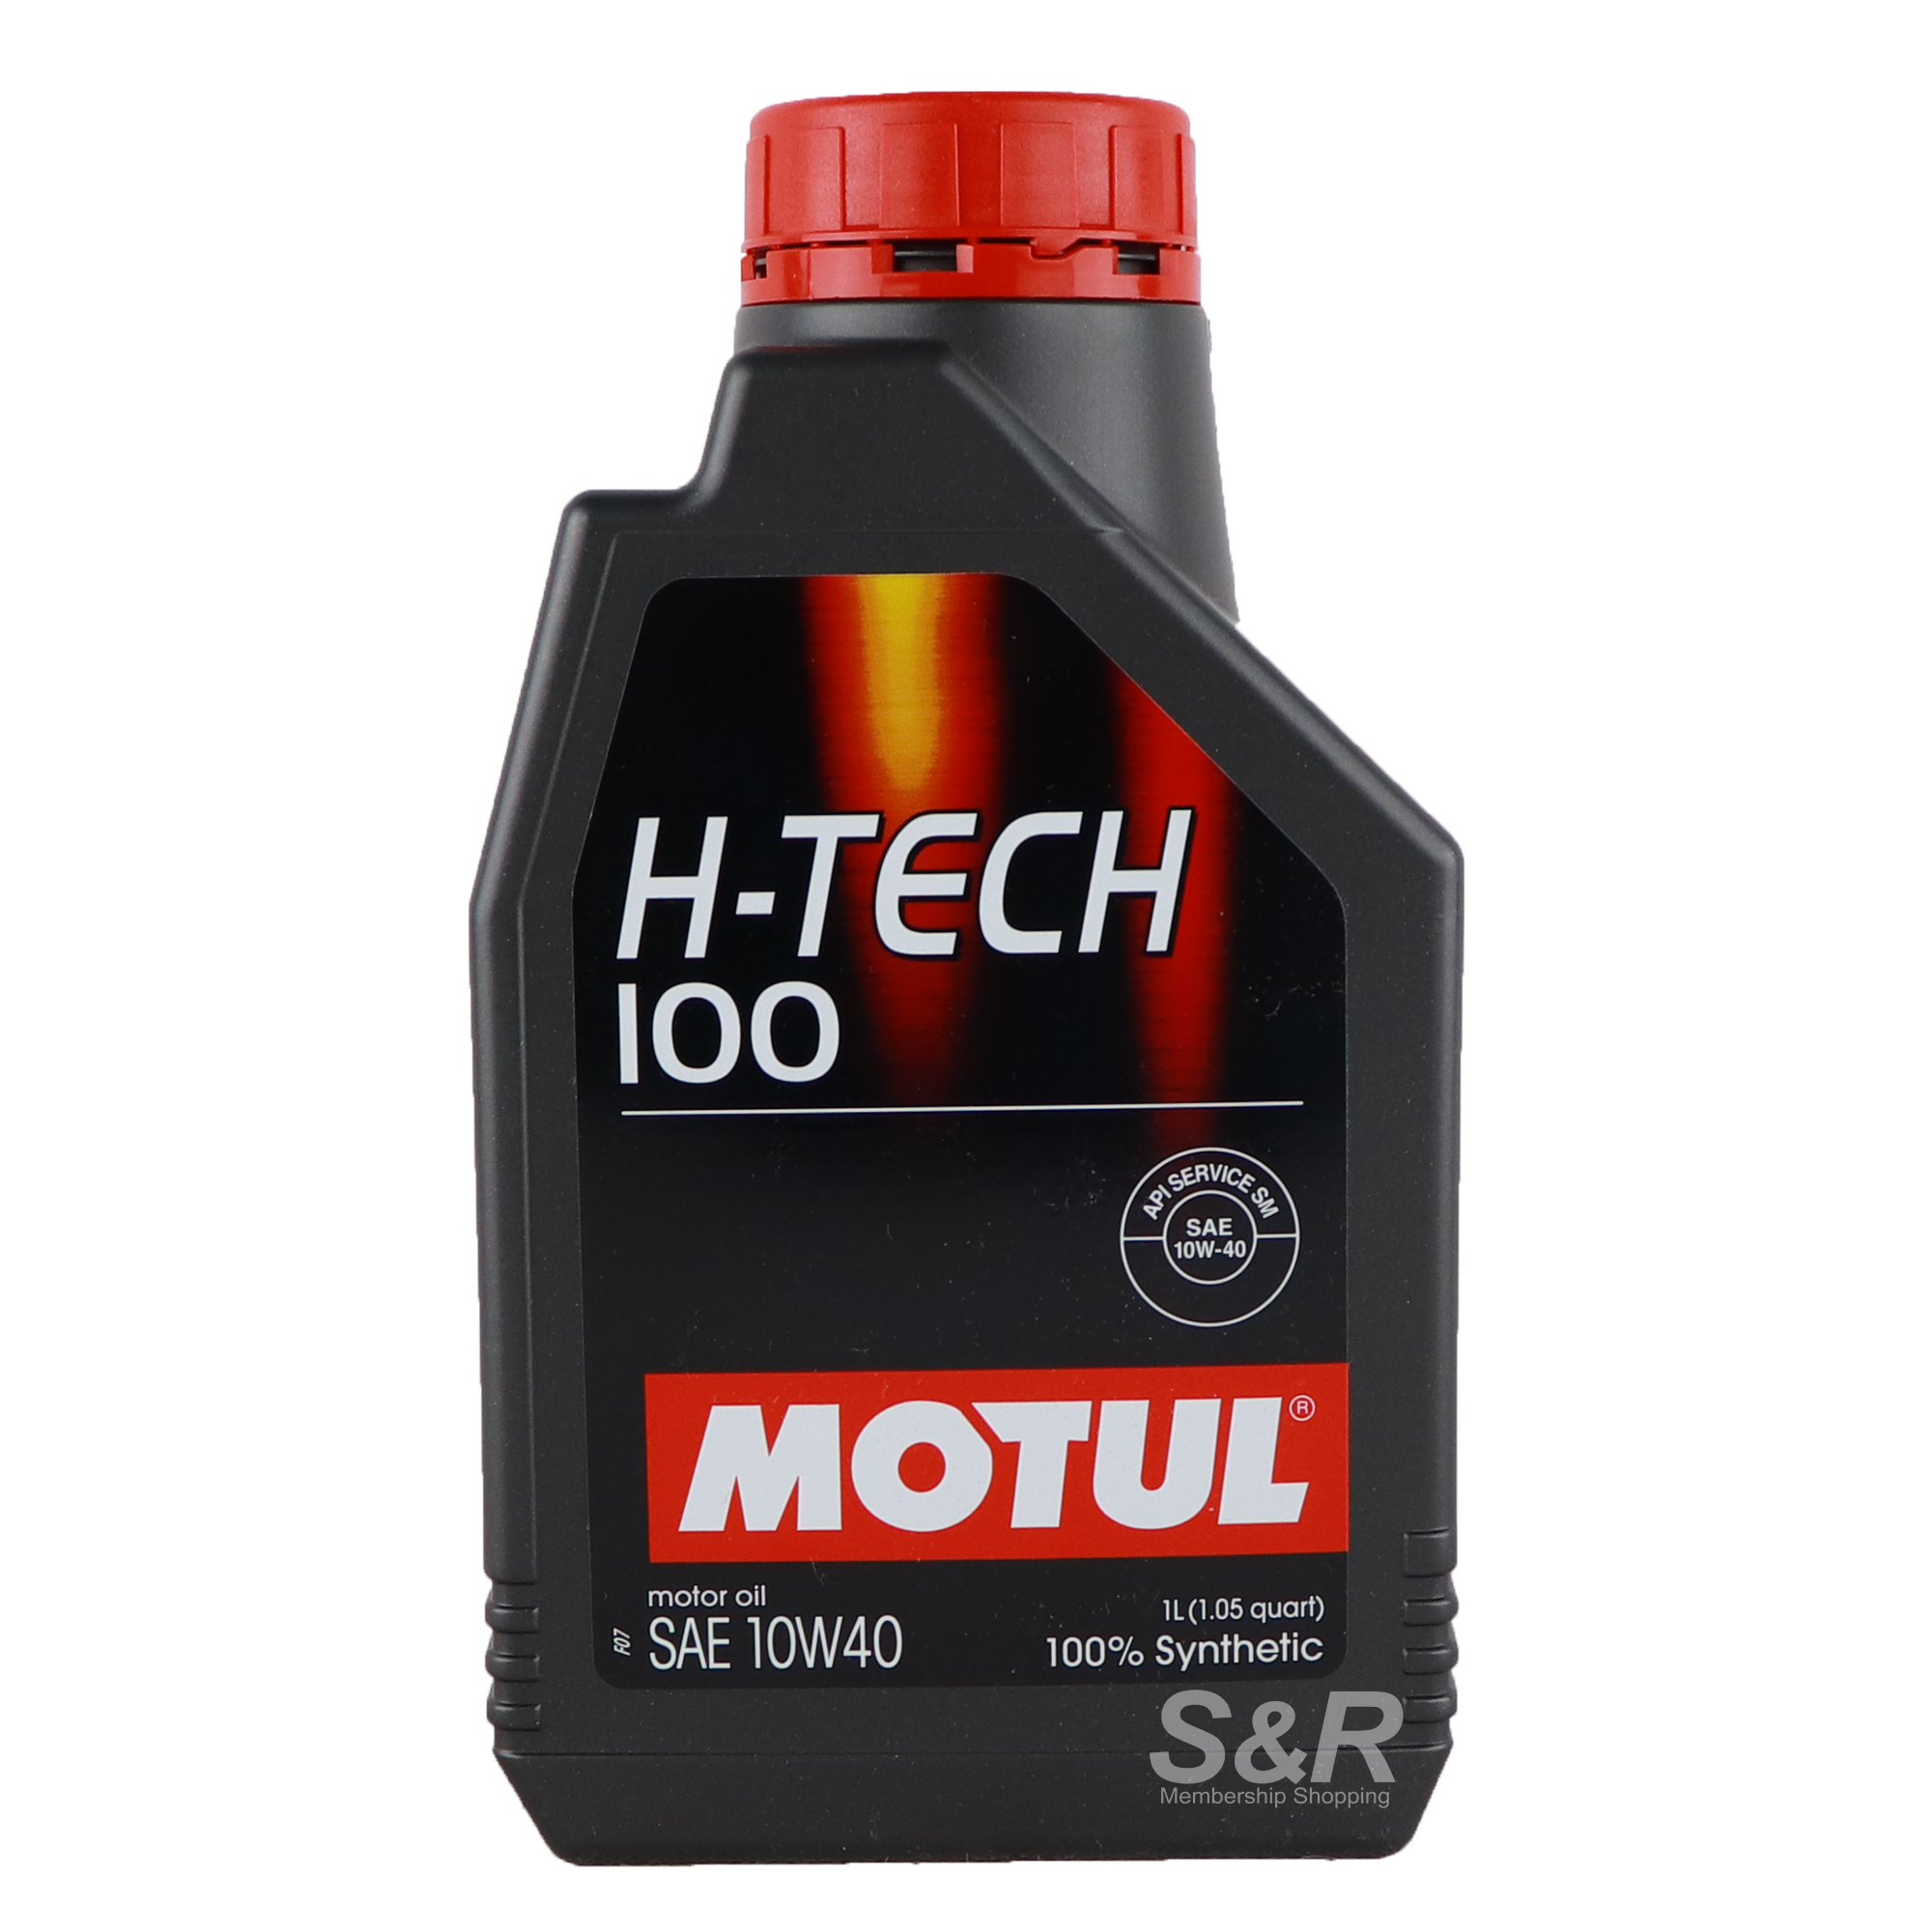 Motul H-tech 100 Motor Oil 1L